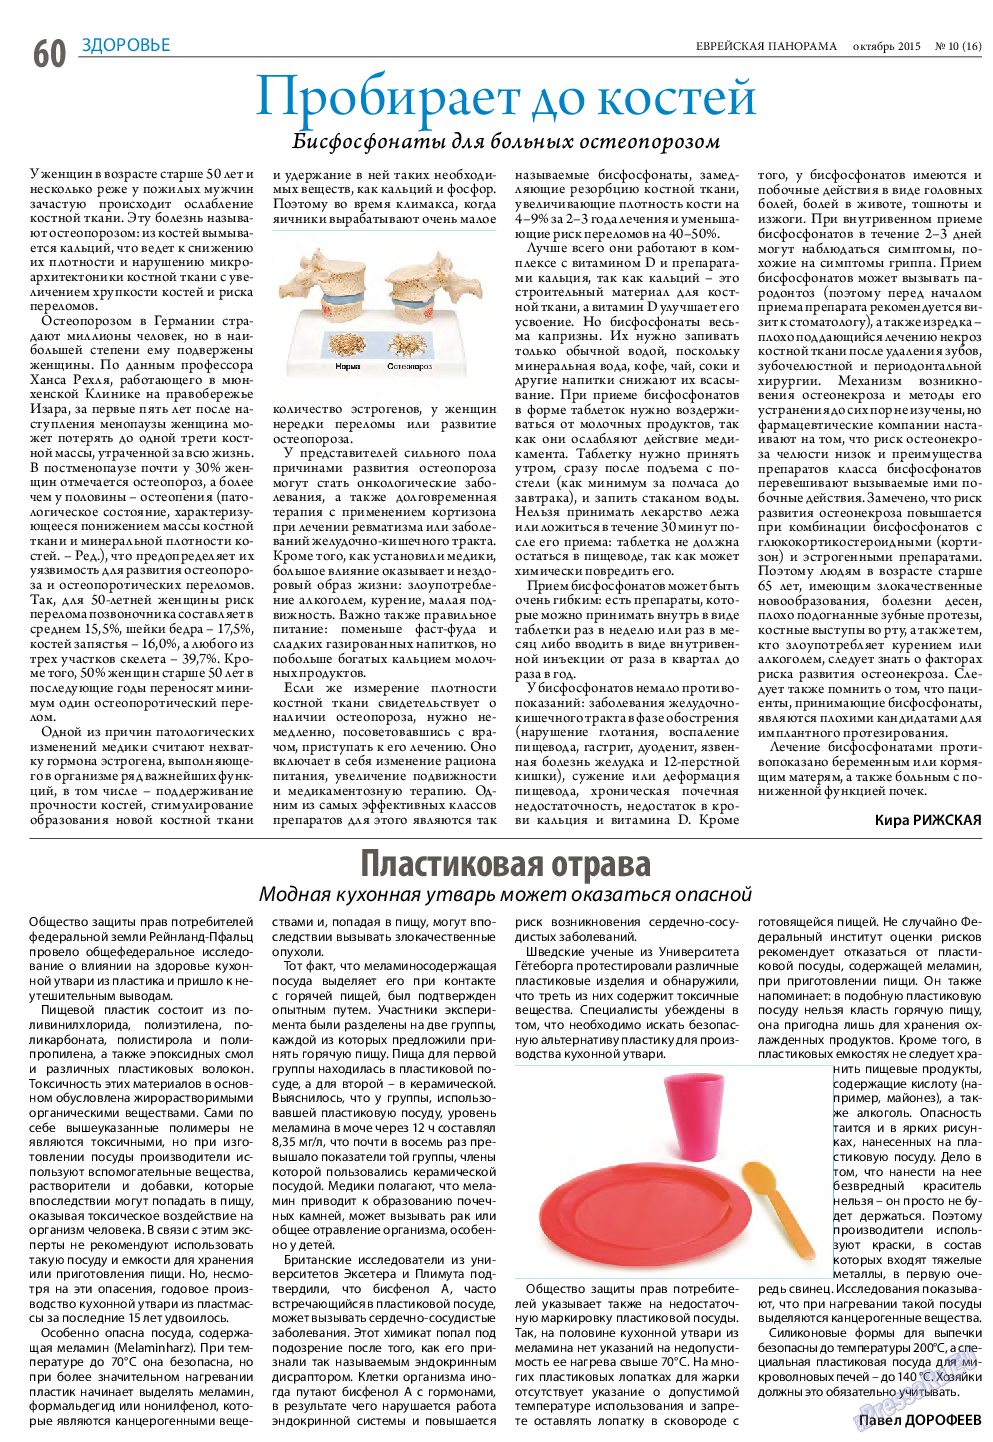 Еврейская панорама, газета. 2015 №10 стр.60